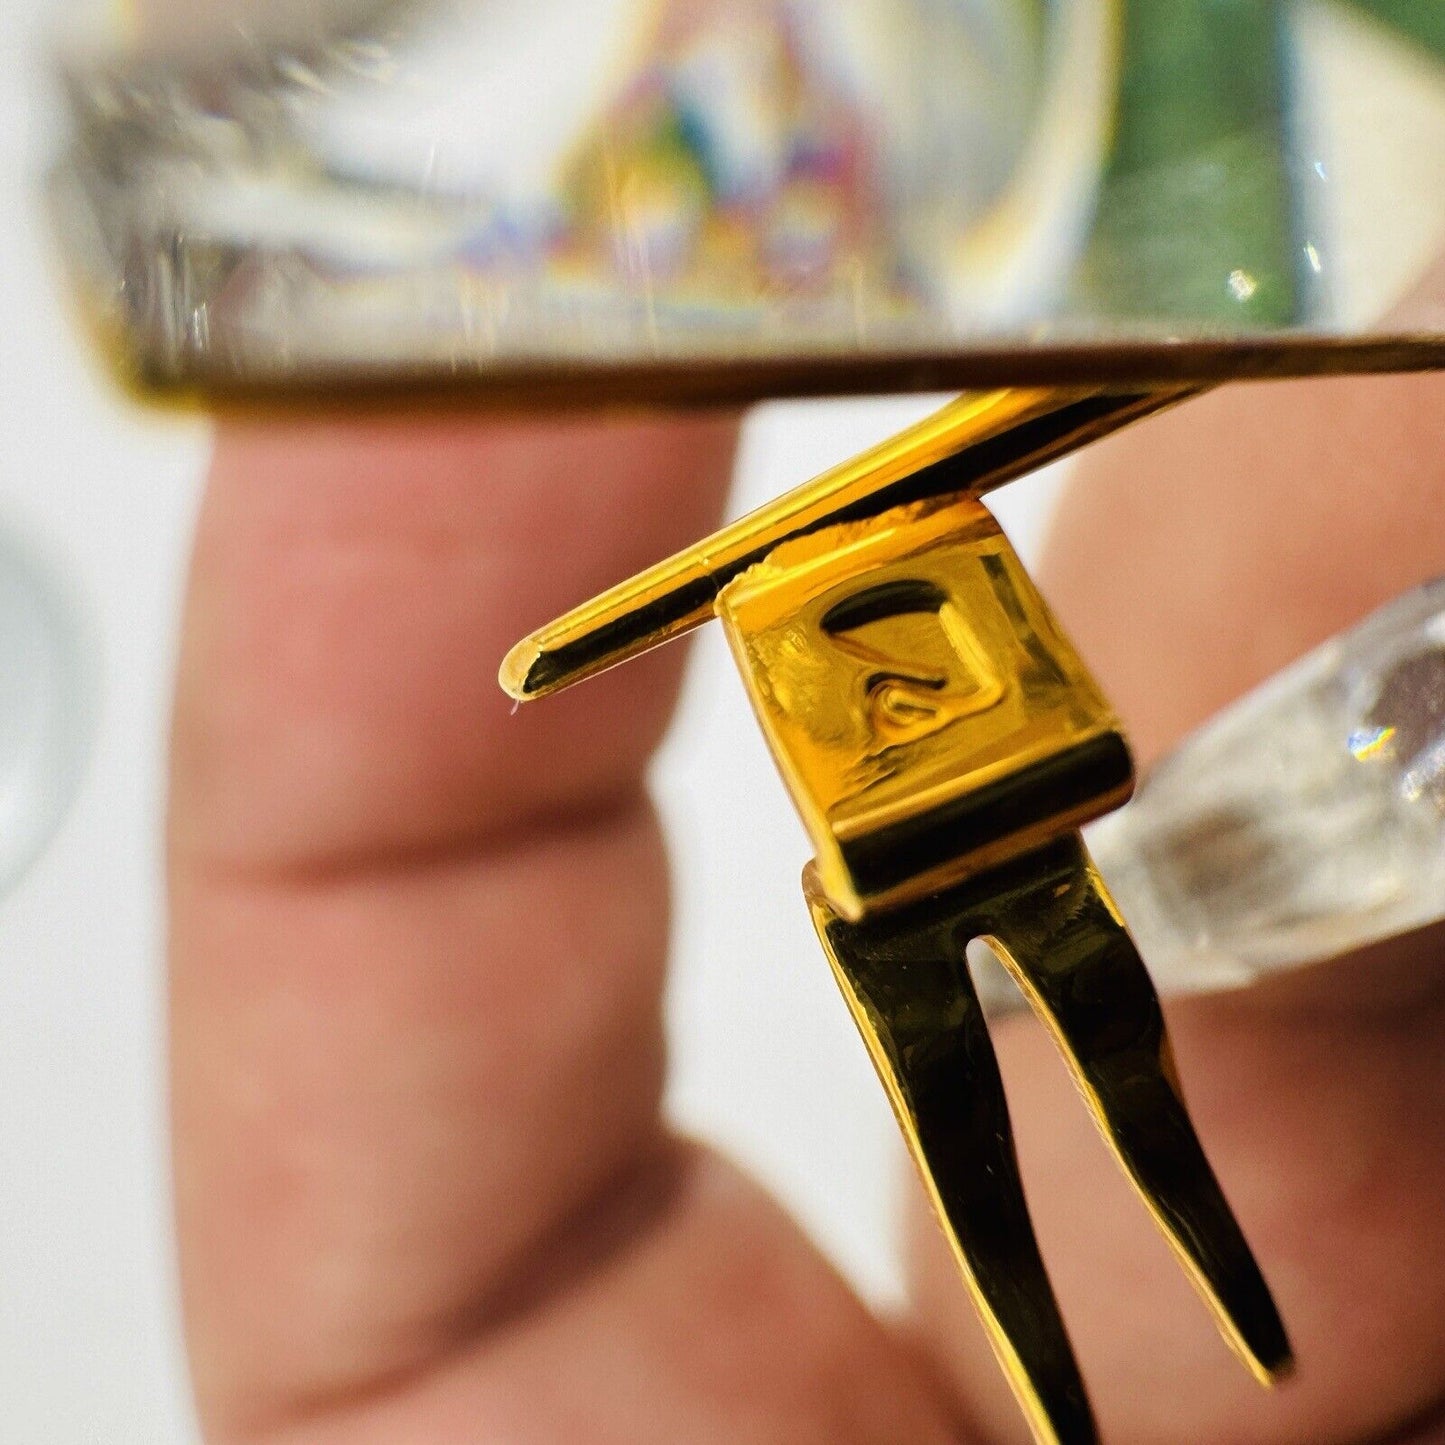 Swarovski Crystal figurine Chinese Gold Junk Journeys 272708